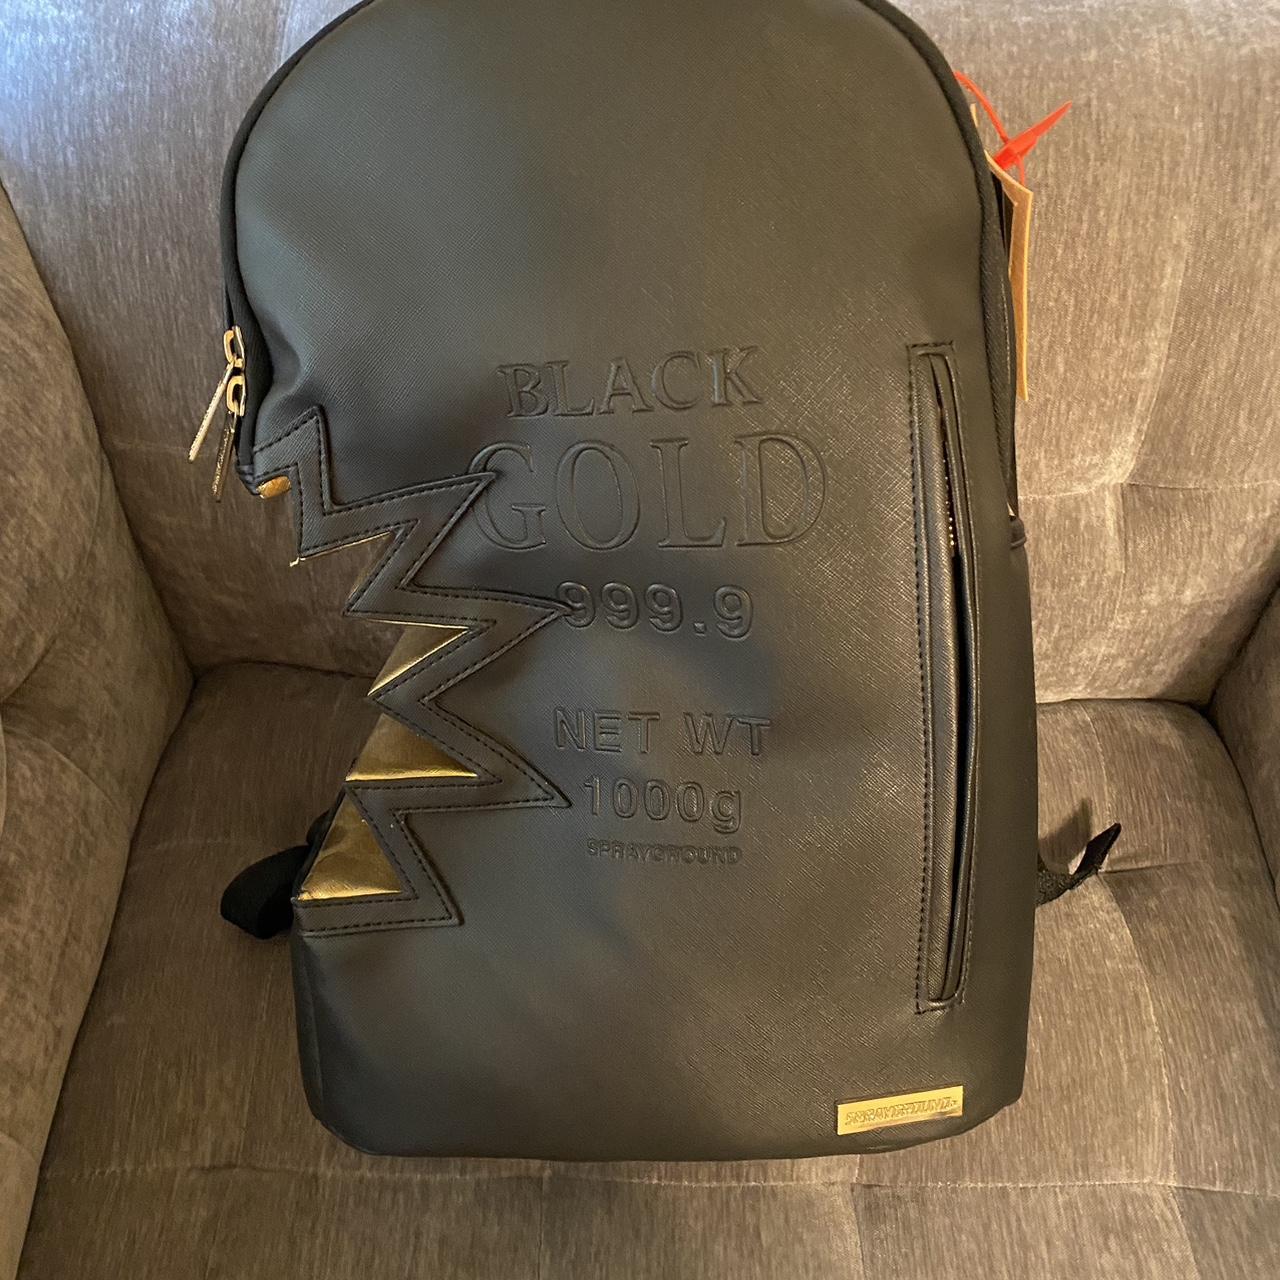 LIMITED EDITION SprayGround duffle bag made in 2019. - Depop